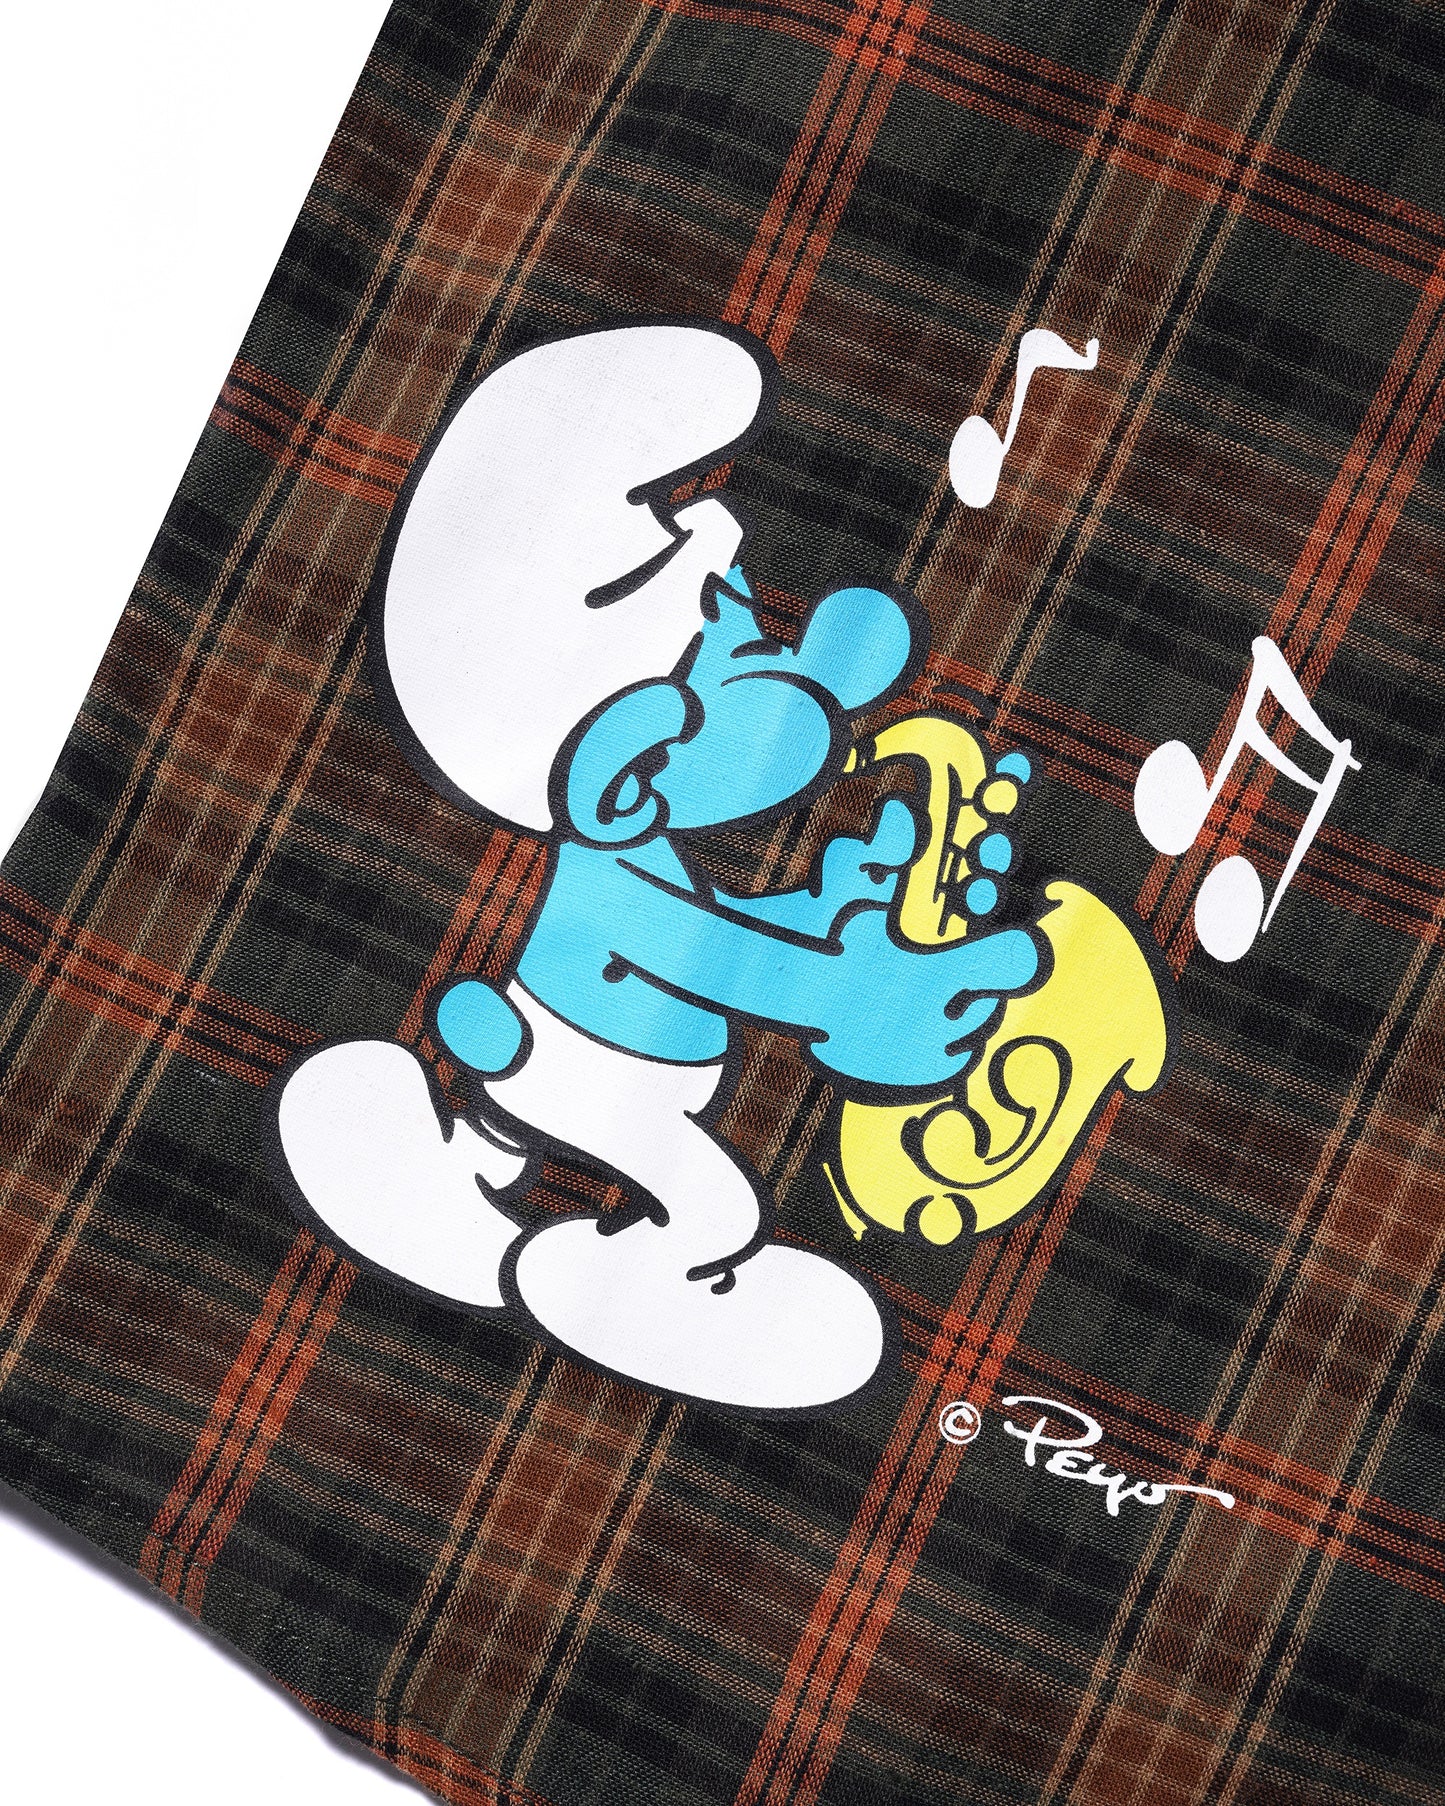 BUTTER GOODS x The Smurfs Harmony Plaid L/S Shirt - Moss/Bark